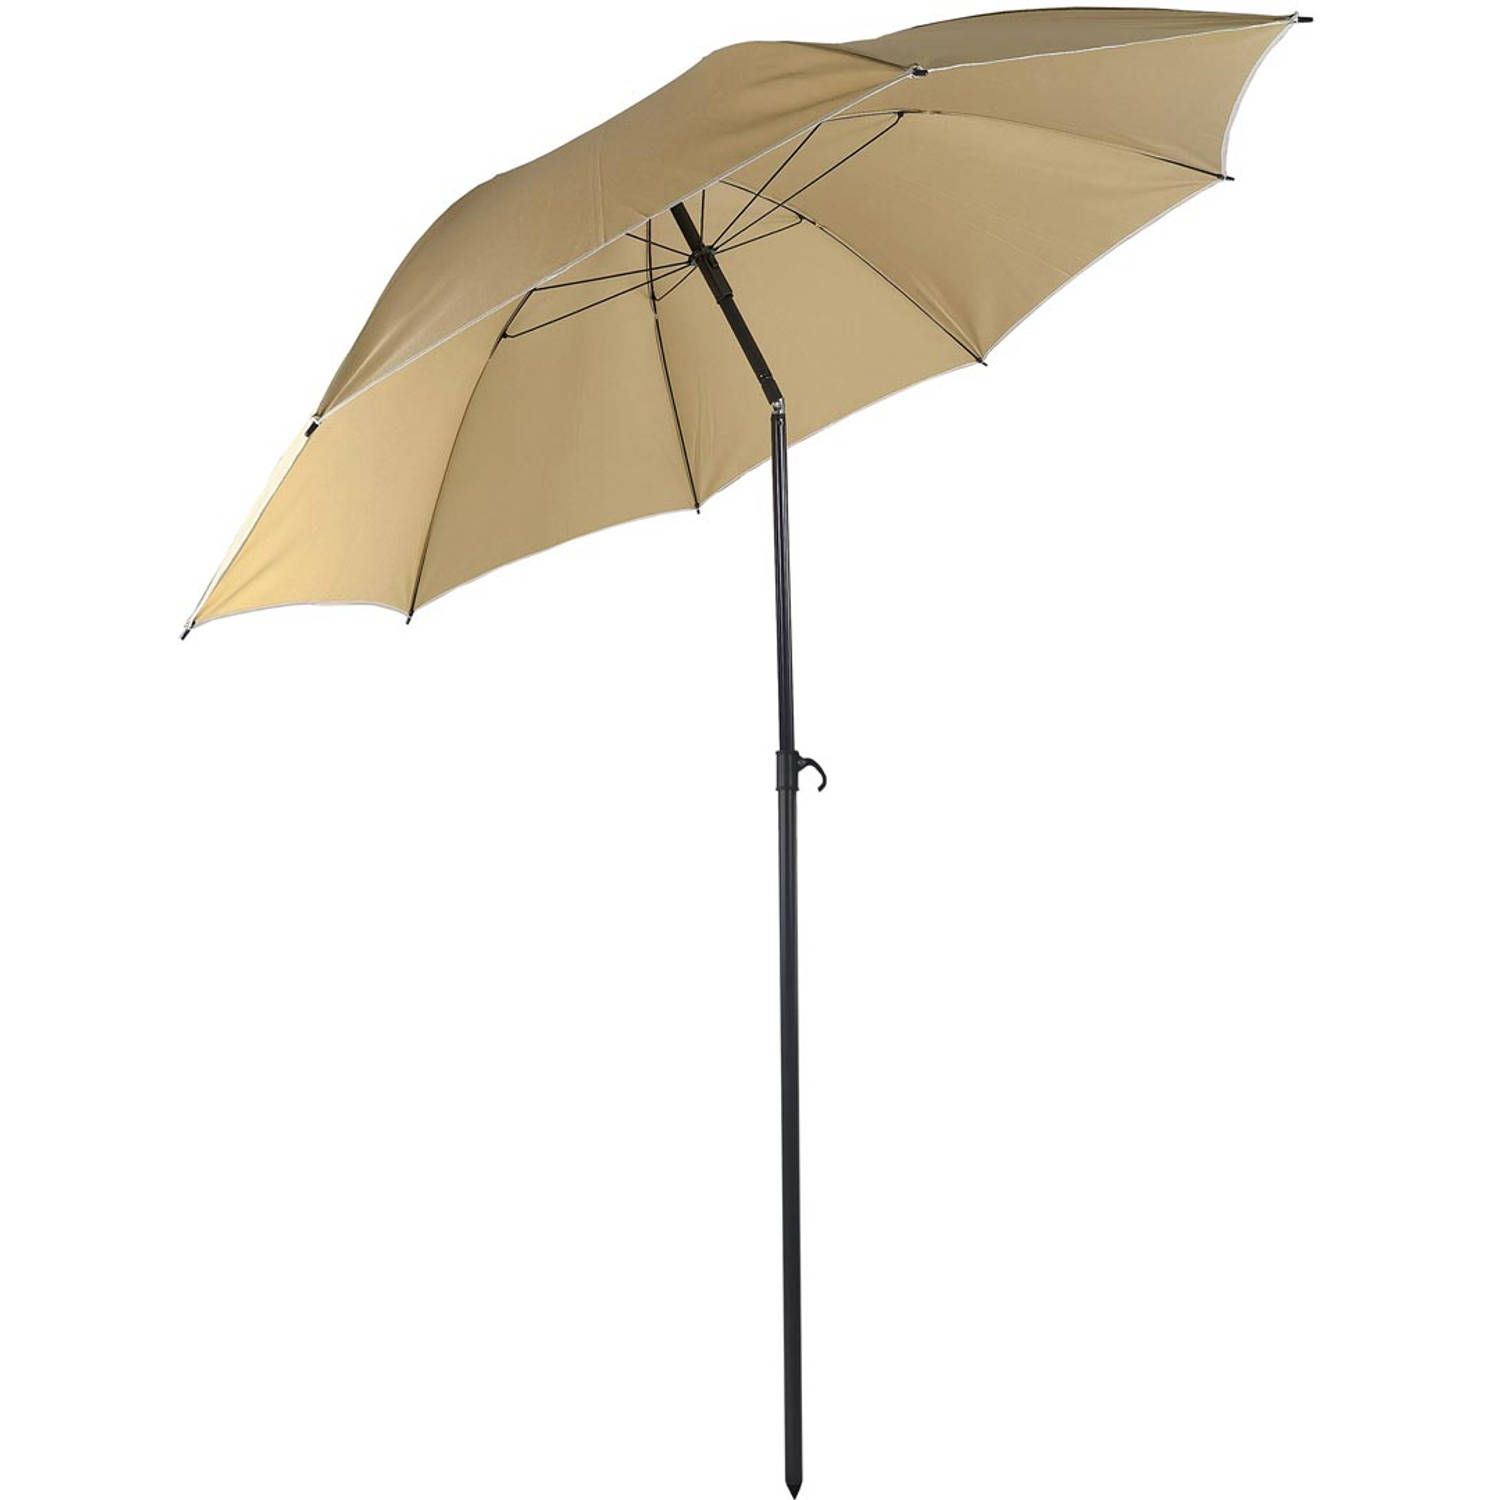 Strand parasol S Ø200cm taupe.